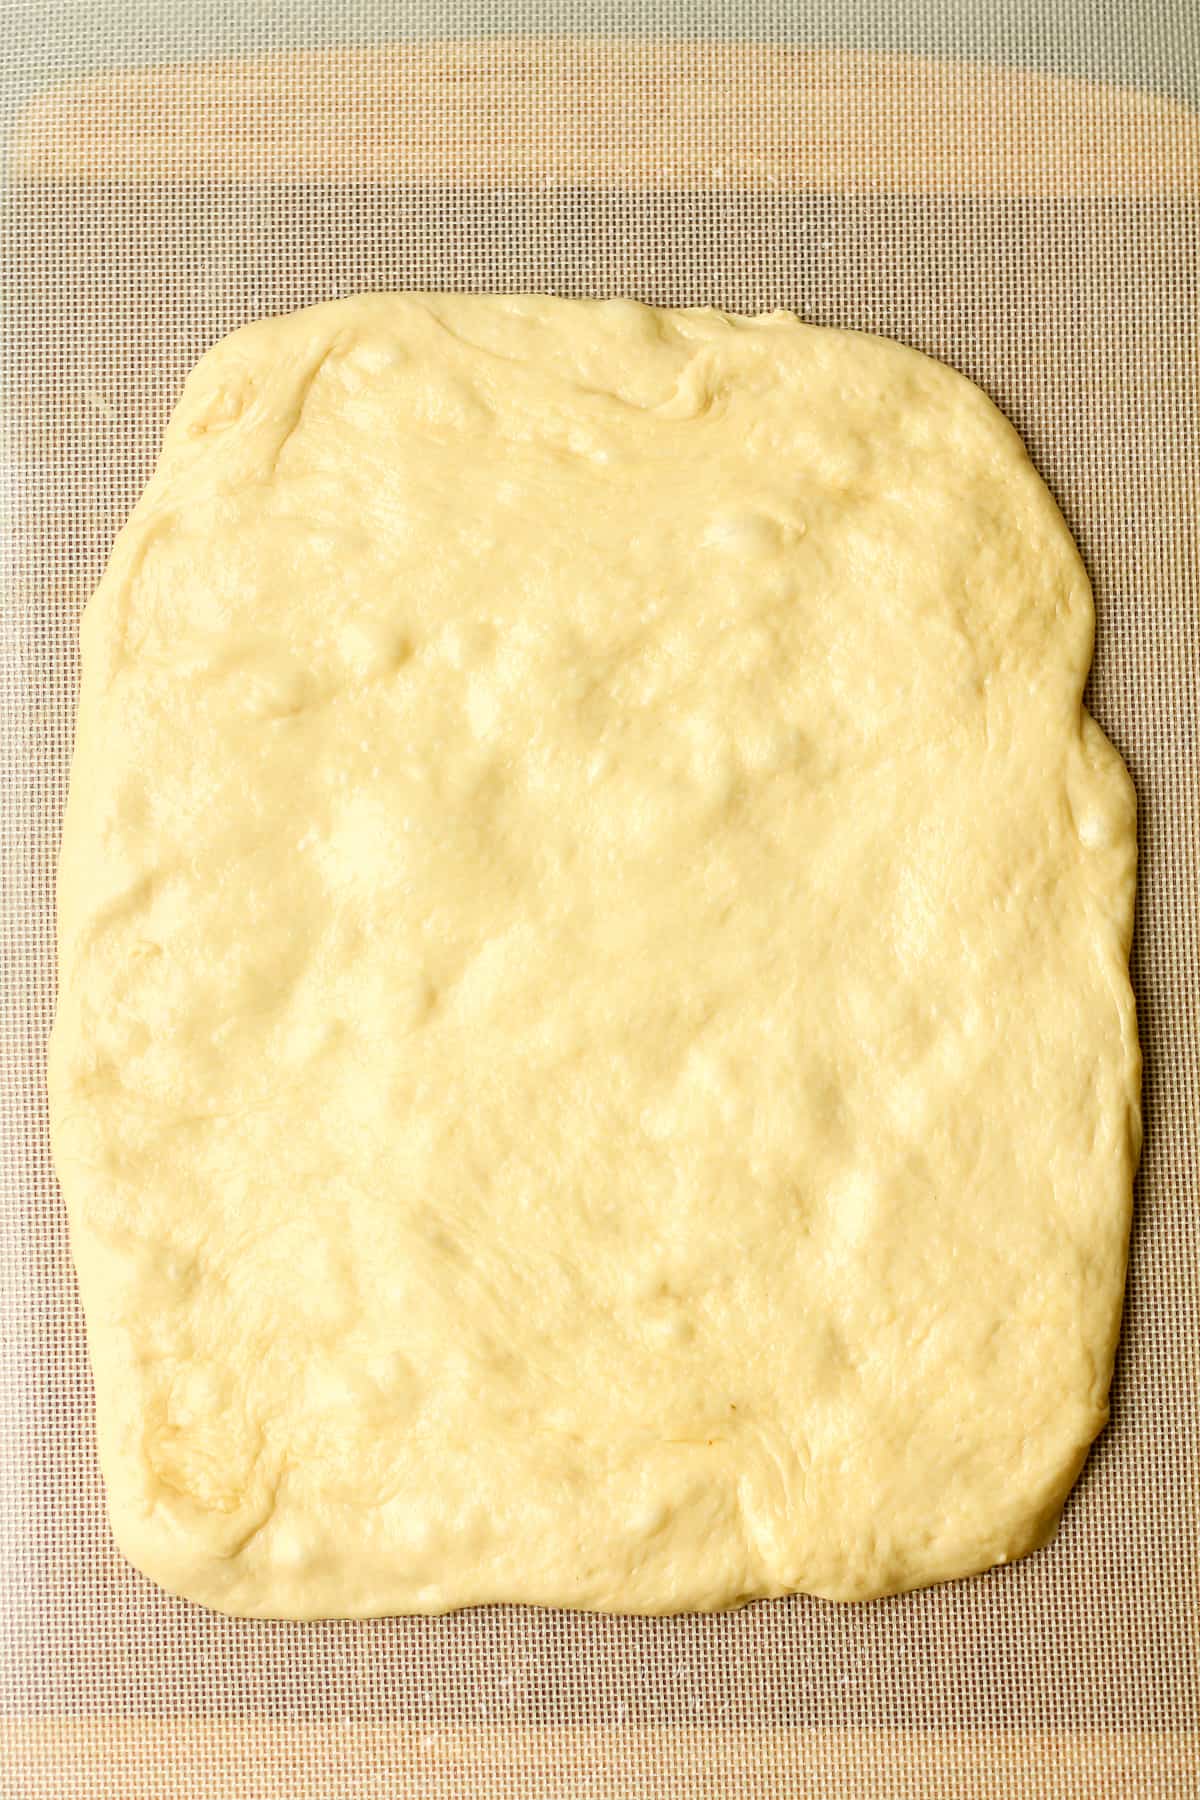 A rectangular shape of the bread dough.